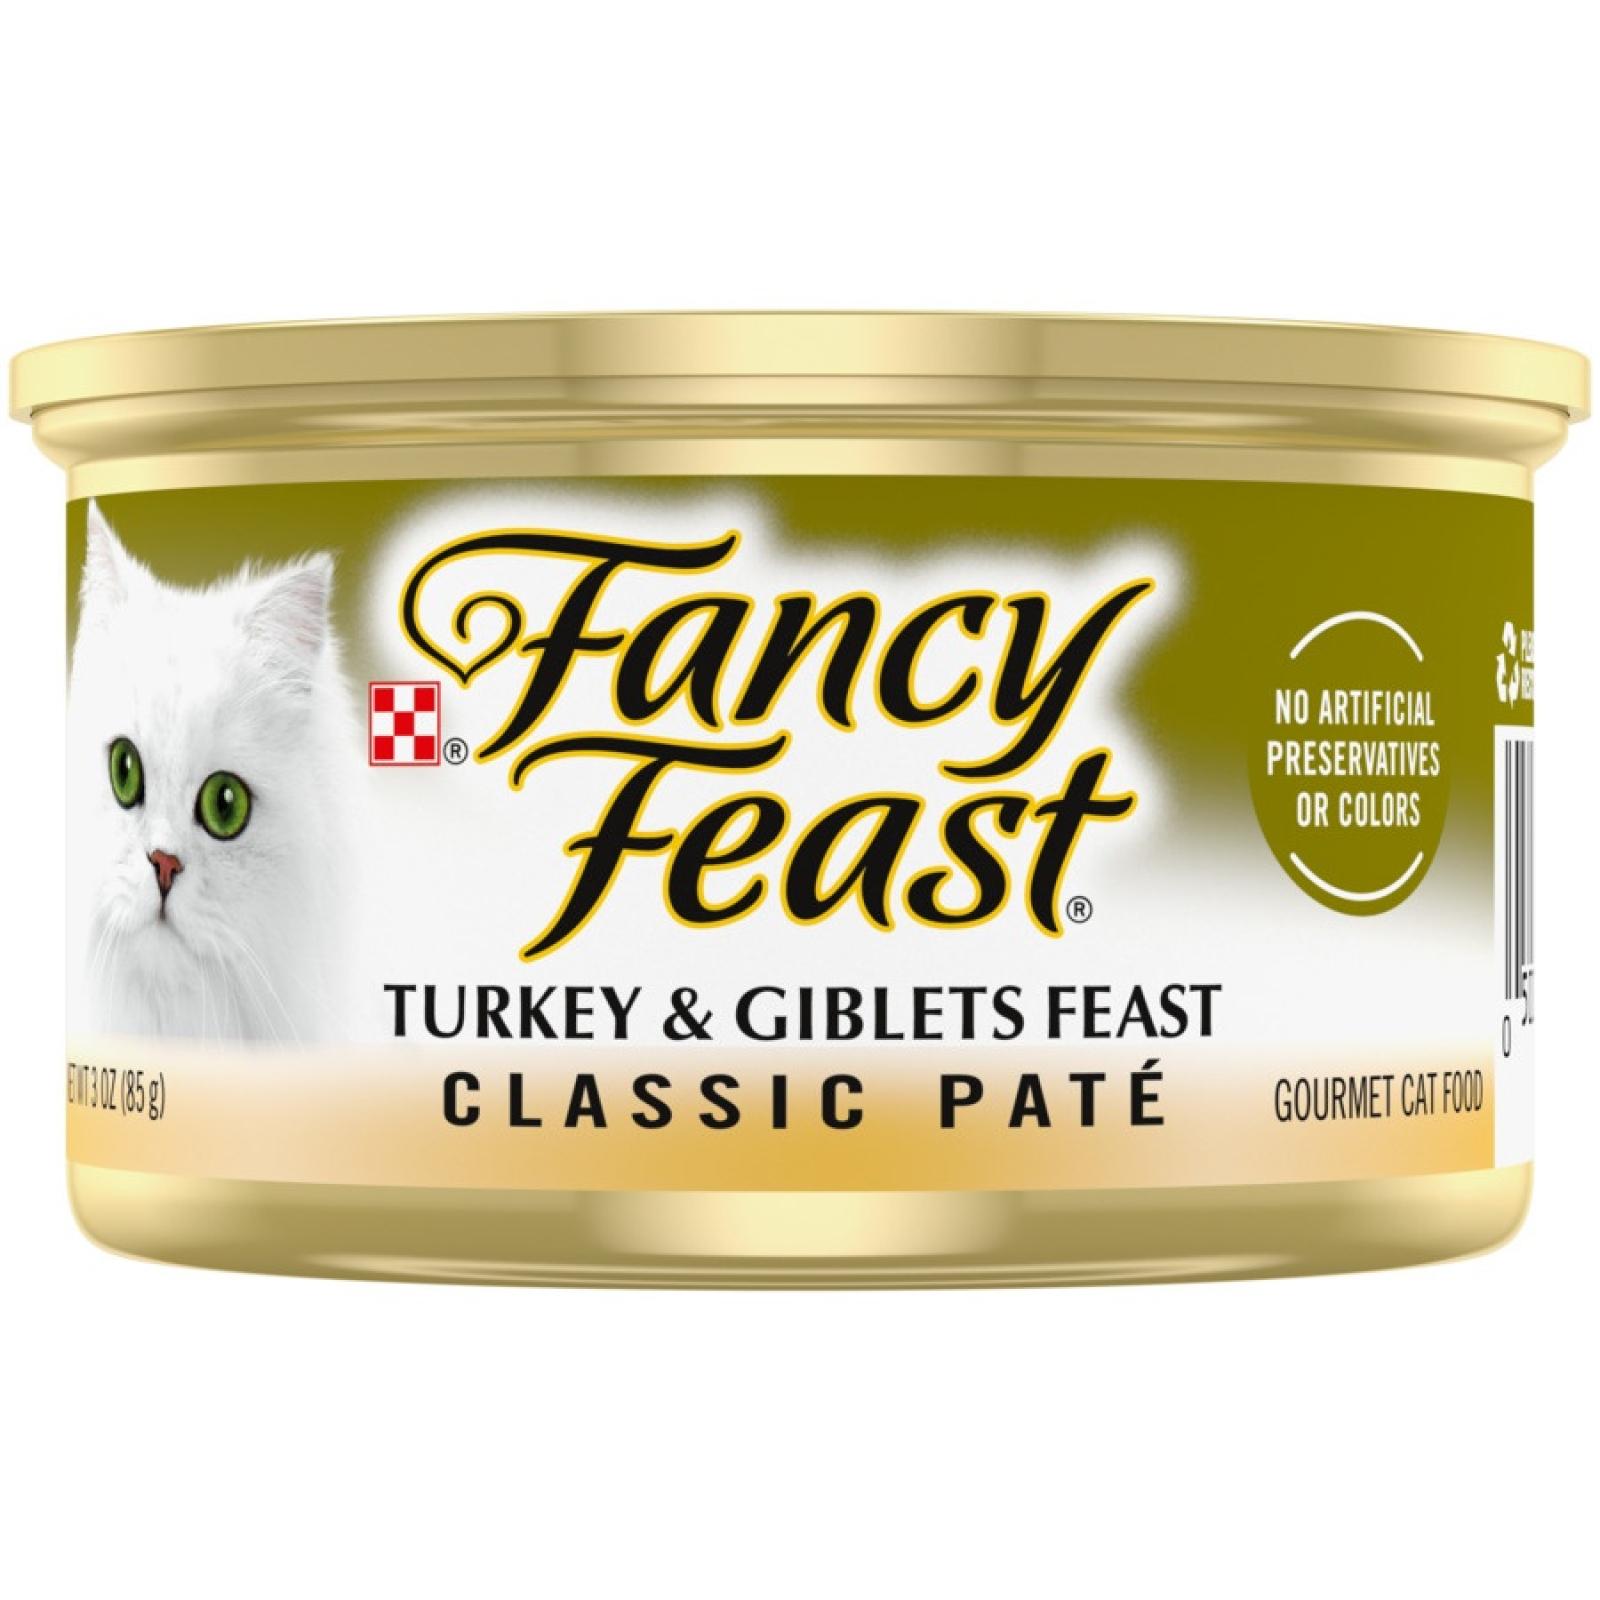 Purina Fancy Feast Turkey & Giblets Feast Classic Pate